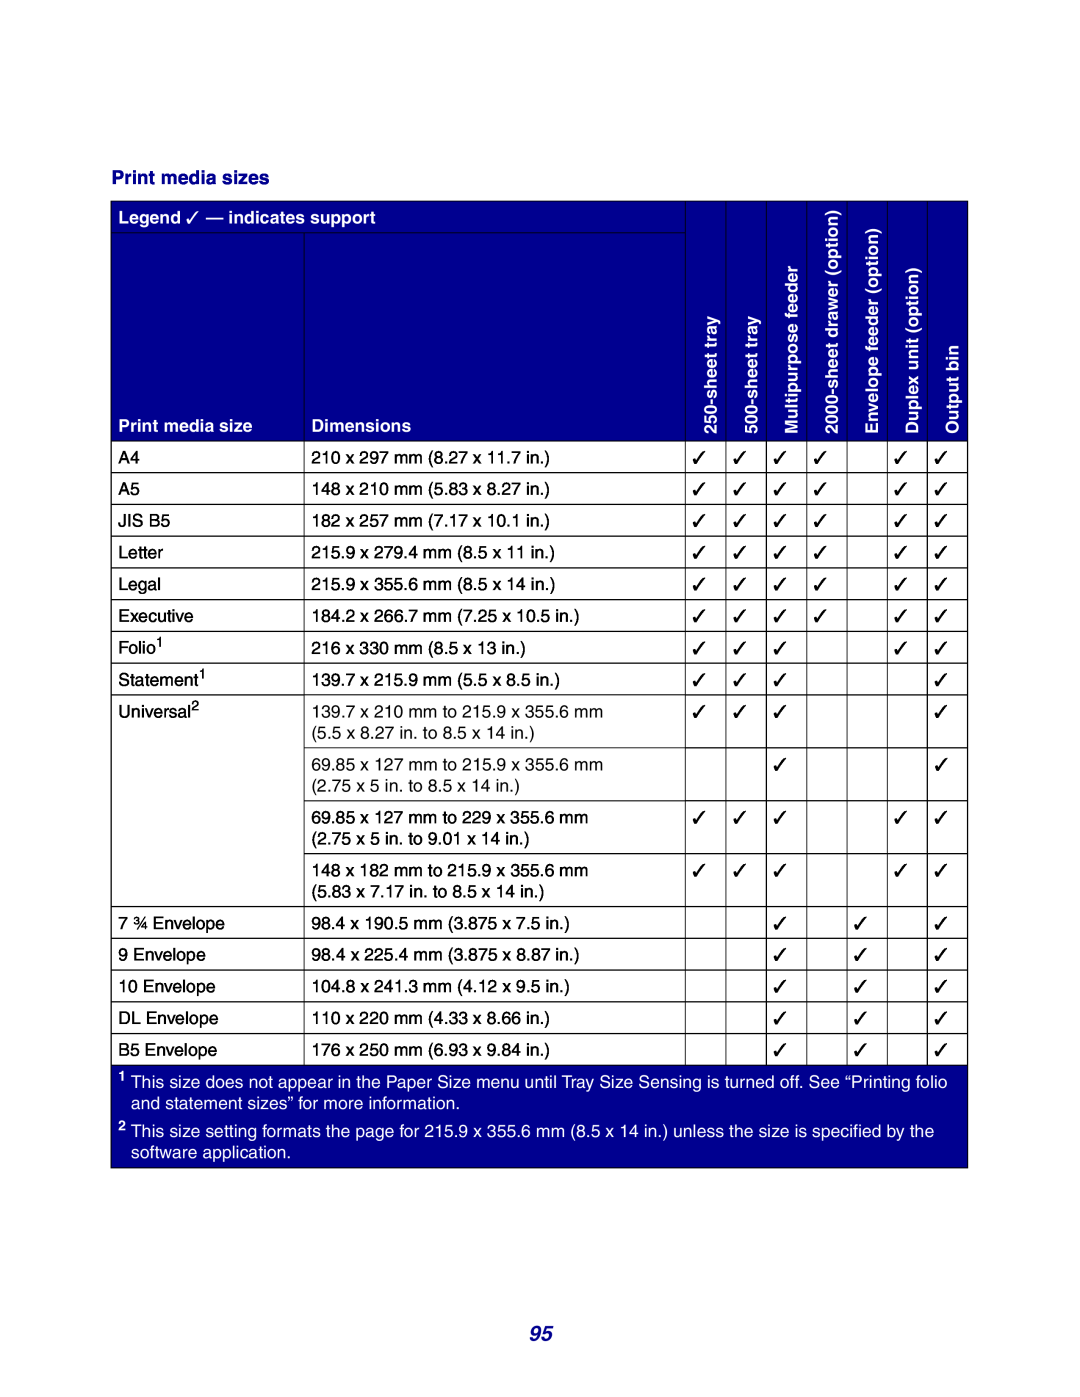 Lexmark X642e manual Print media sizes, Dimensions, Legend - indicates support 